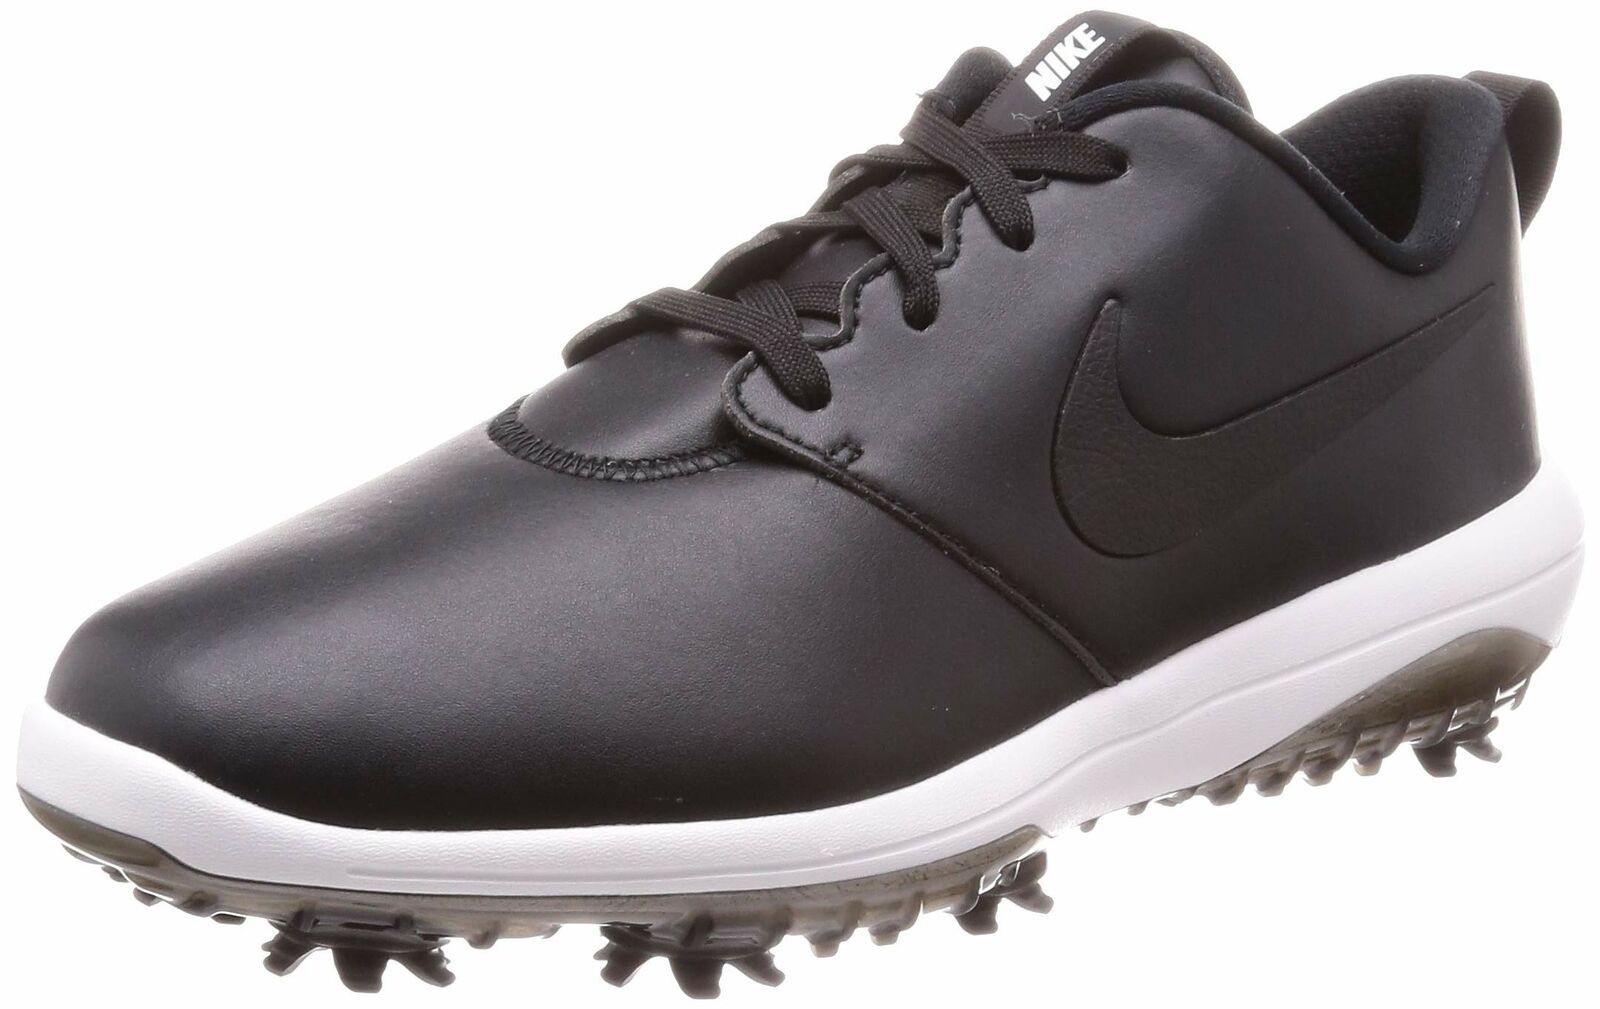 Nike Men's Roshe G Tour Golf Shoes Black/Summit White 8 D(M) US - Golf ...